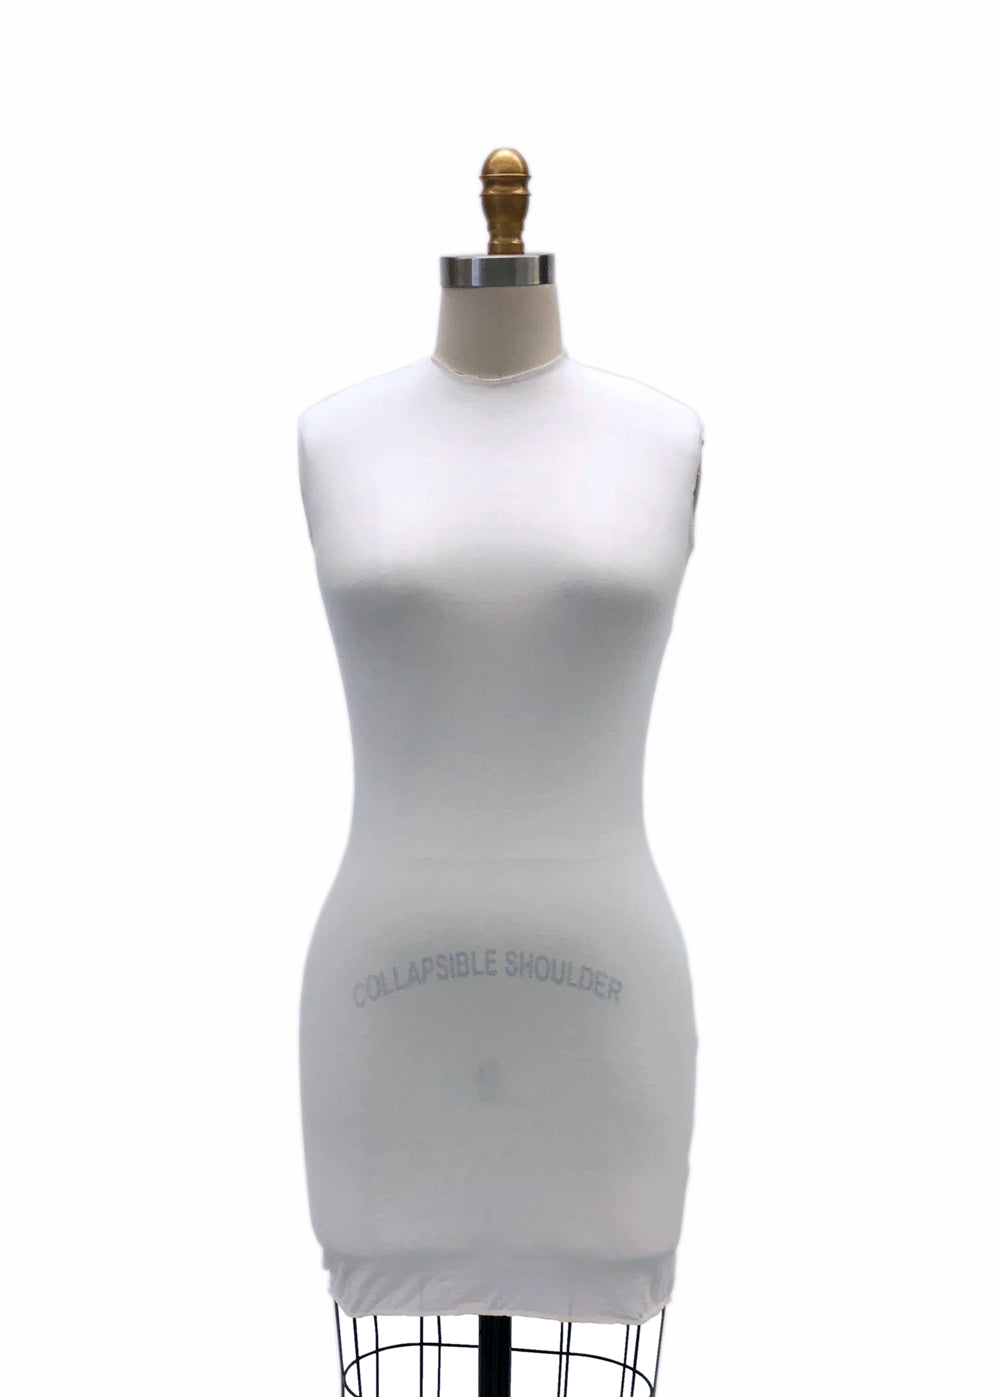  Pro Modular Dress Form Padding Plus Size Kit (24